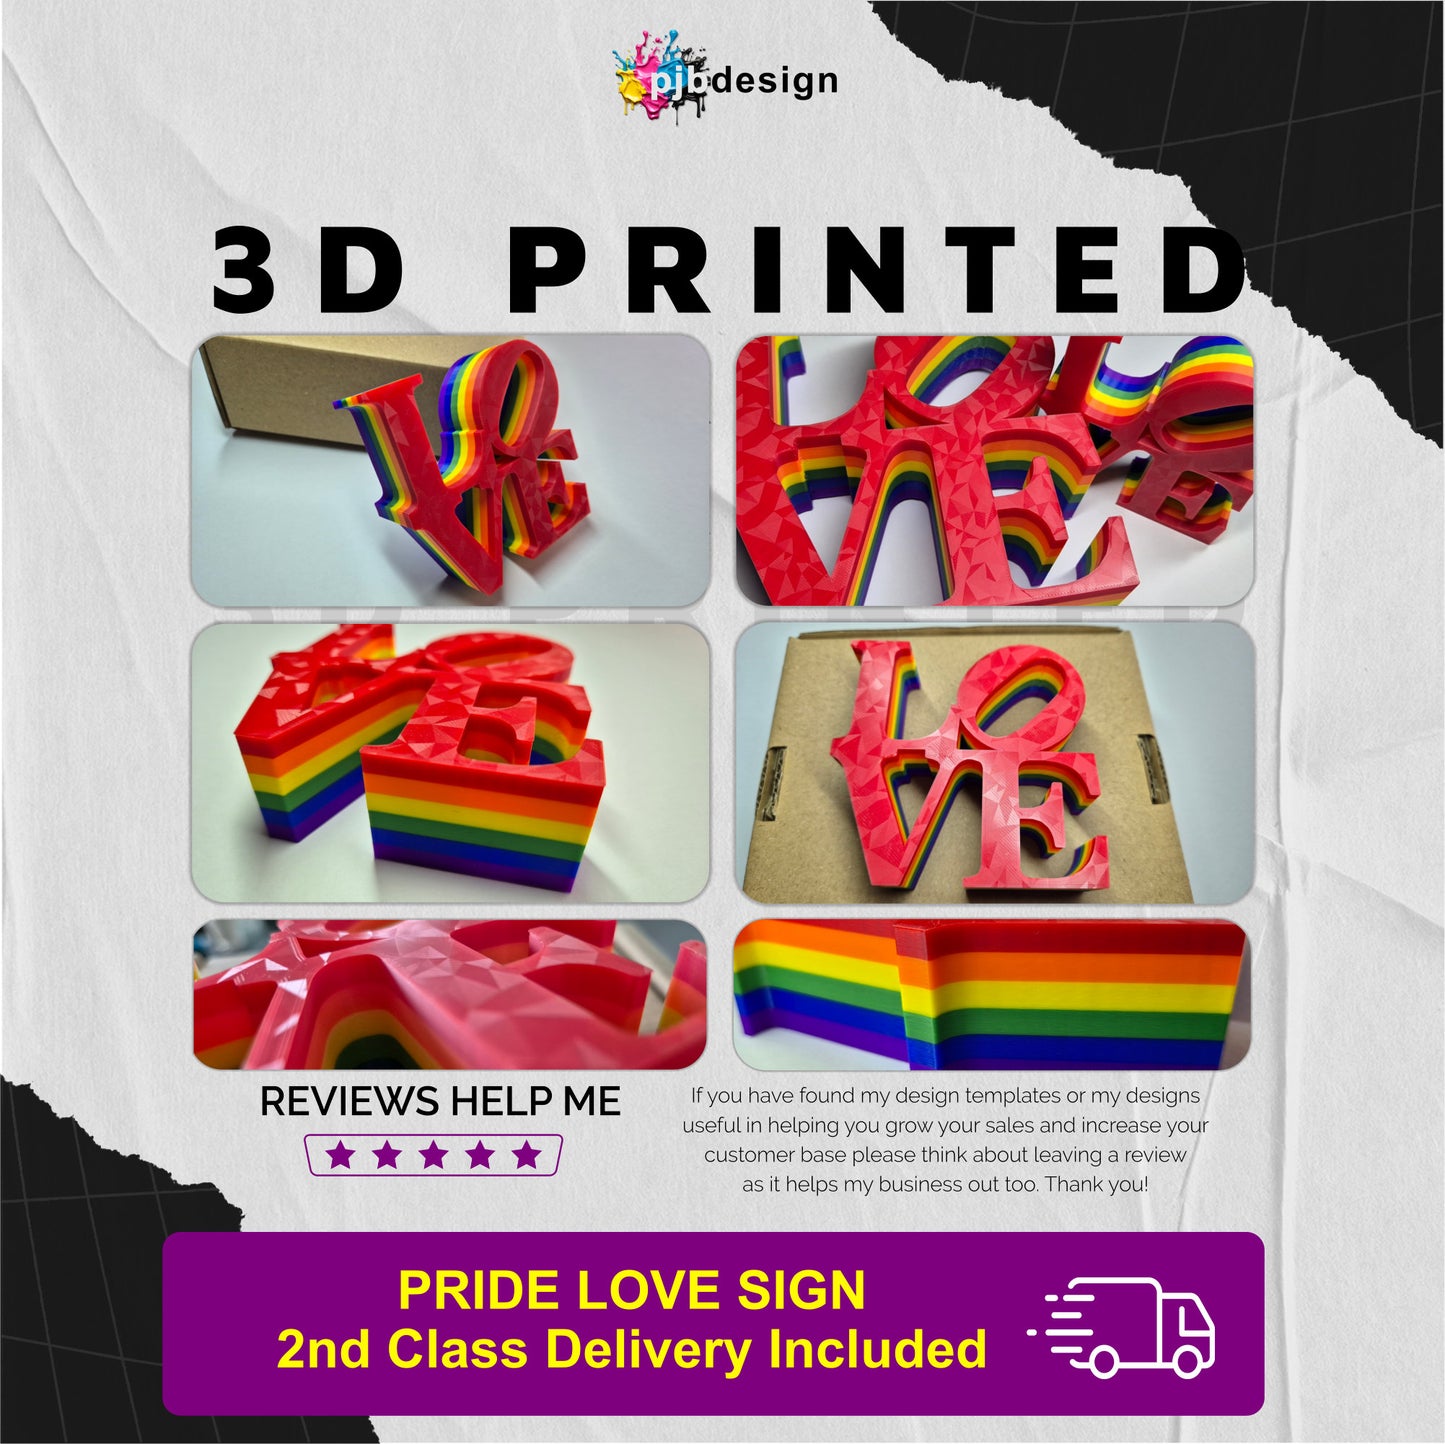 Pride Rainbow Love Sign, Home Decor 3D Printed Sculpture - Gift Idea